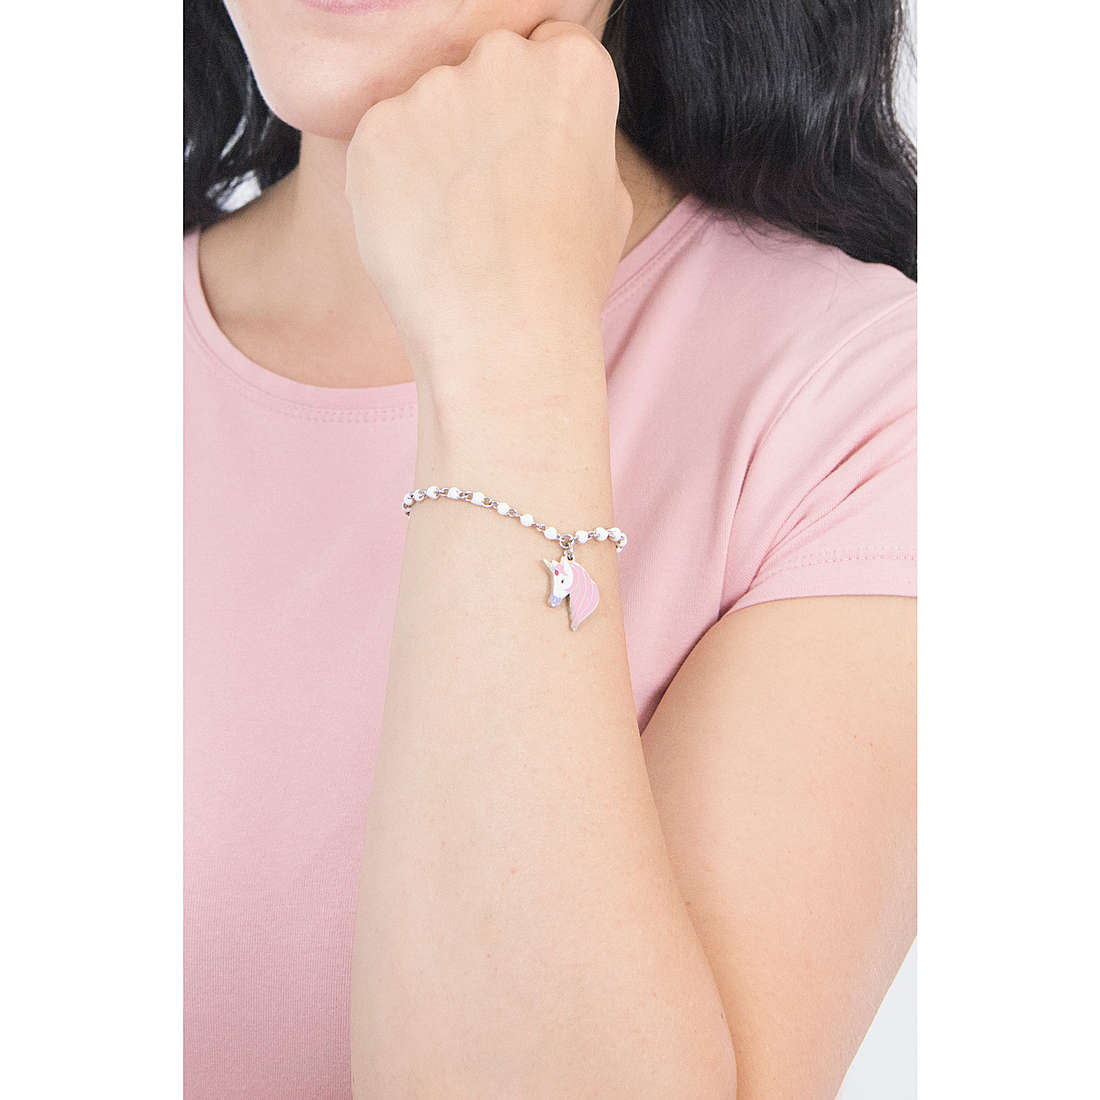 Kidult bracelets Symbols woman 731841 wearing